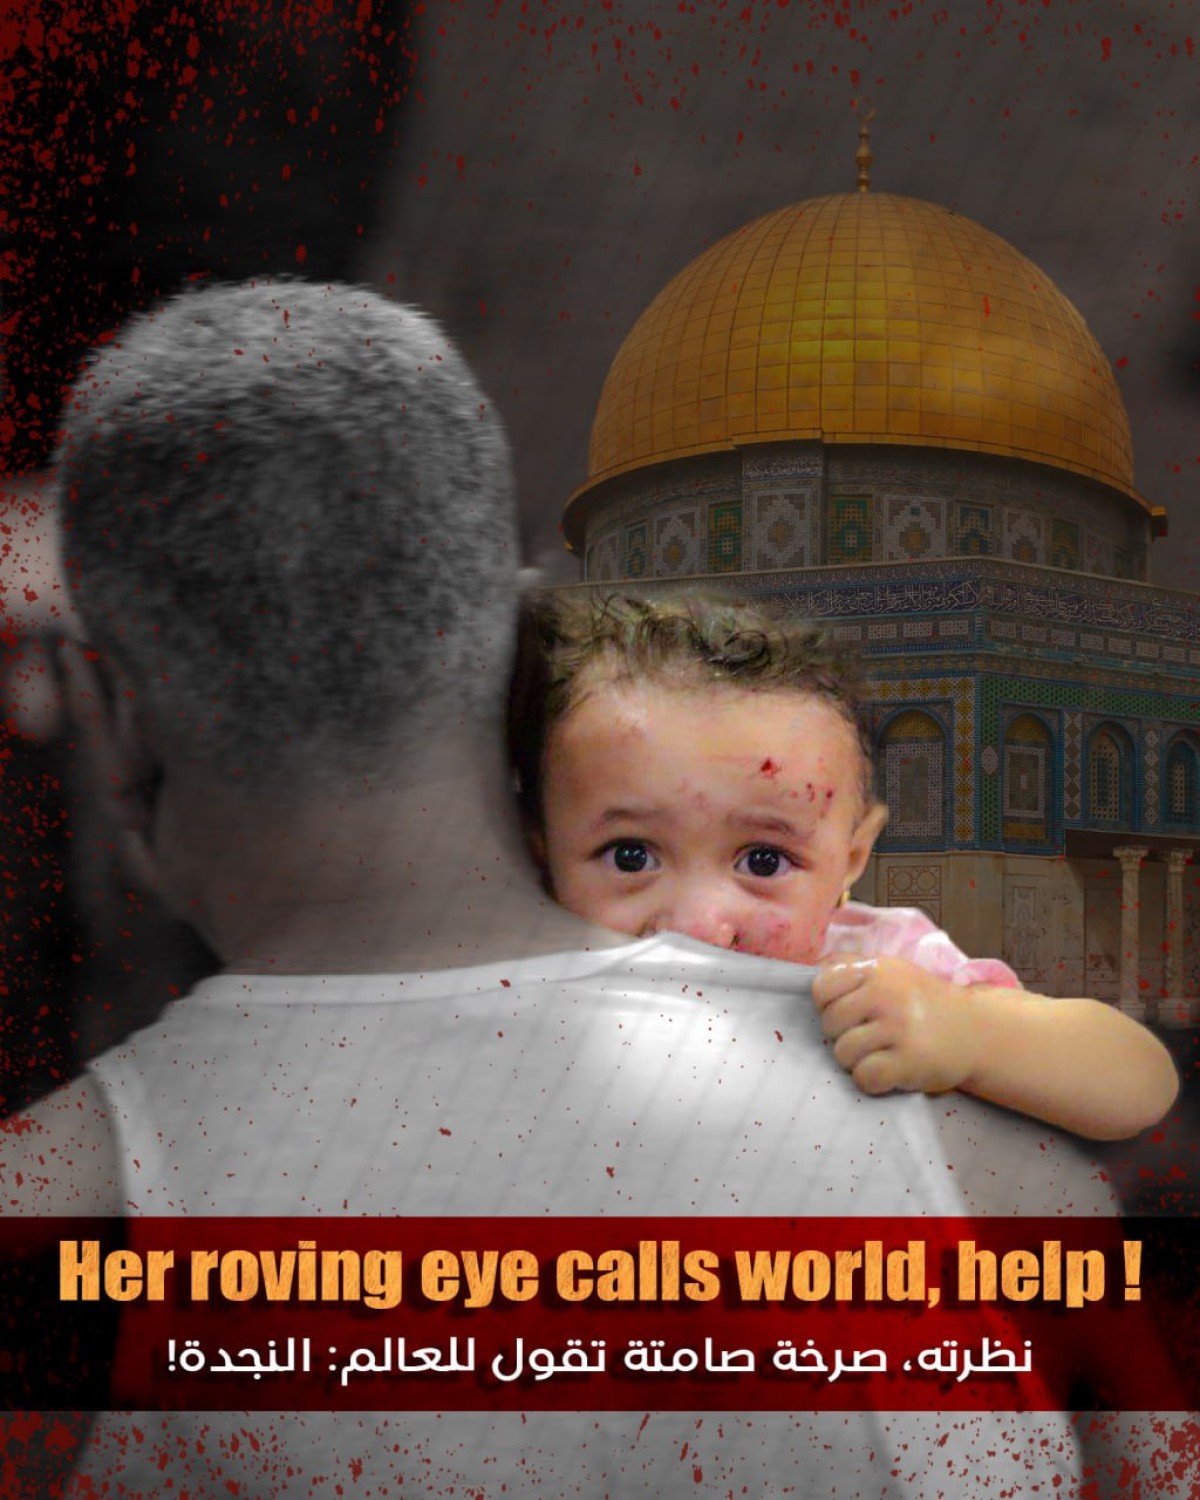 Her roving eye calls world, help!